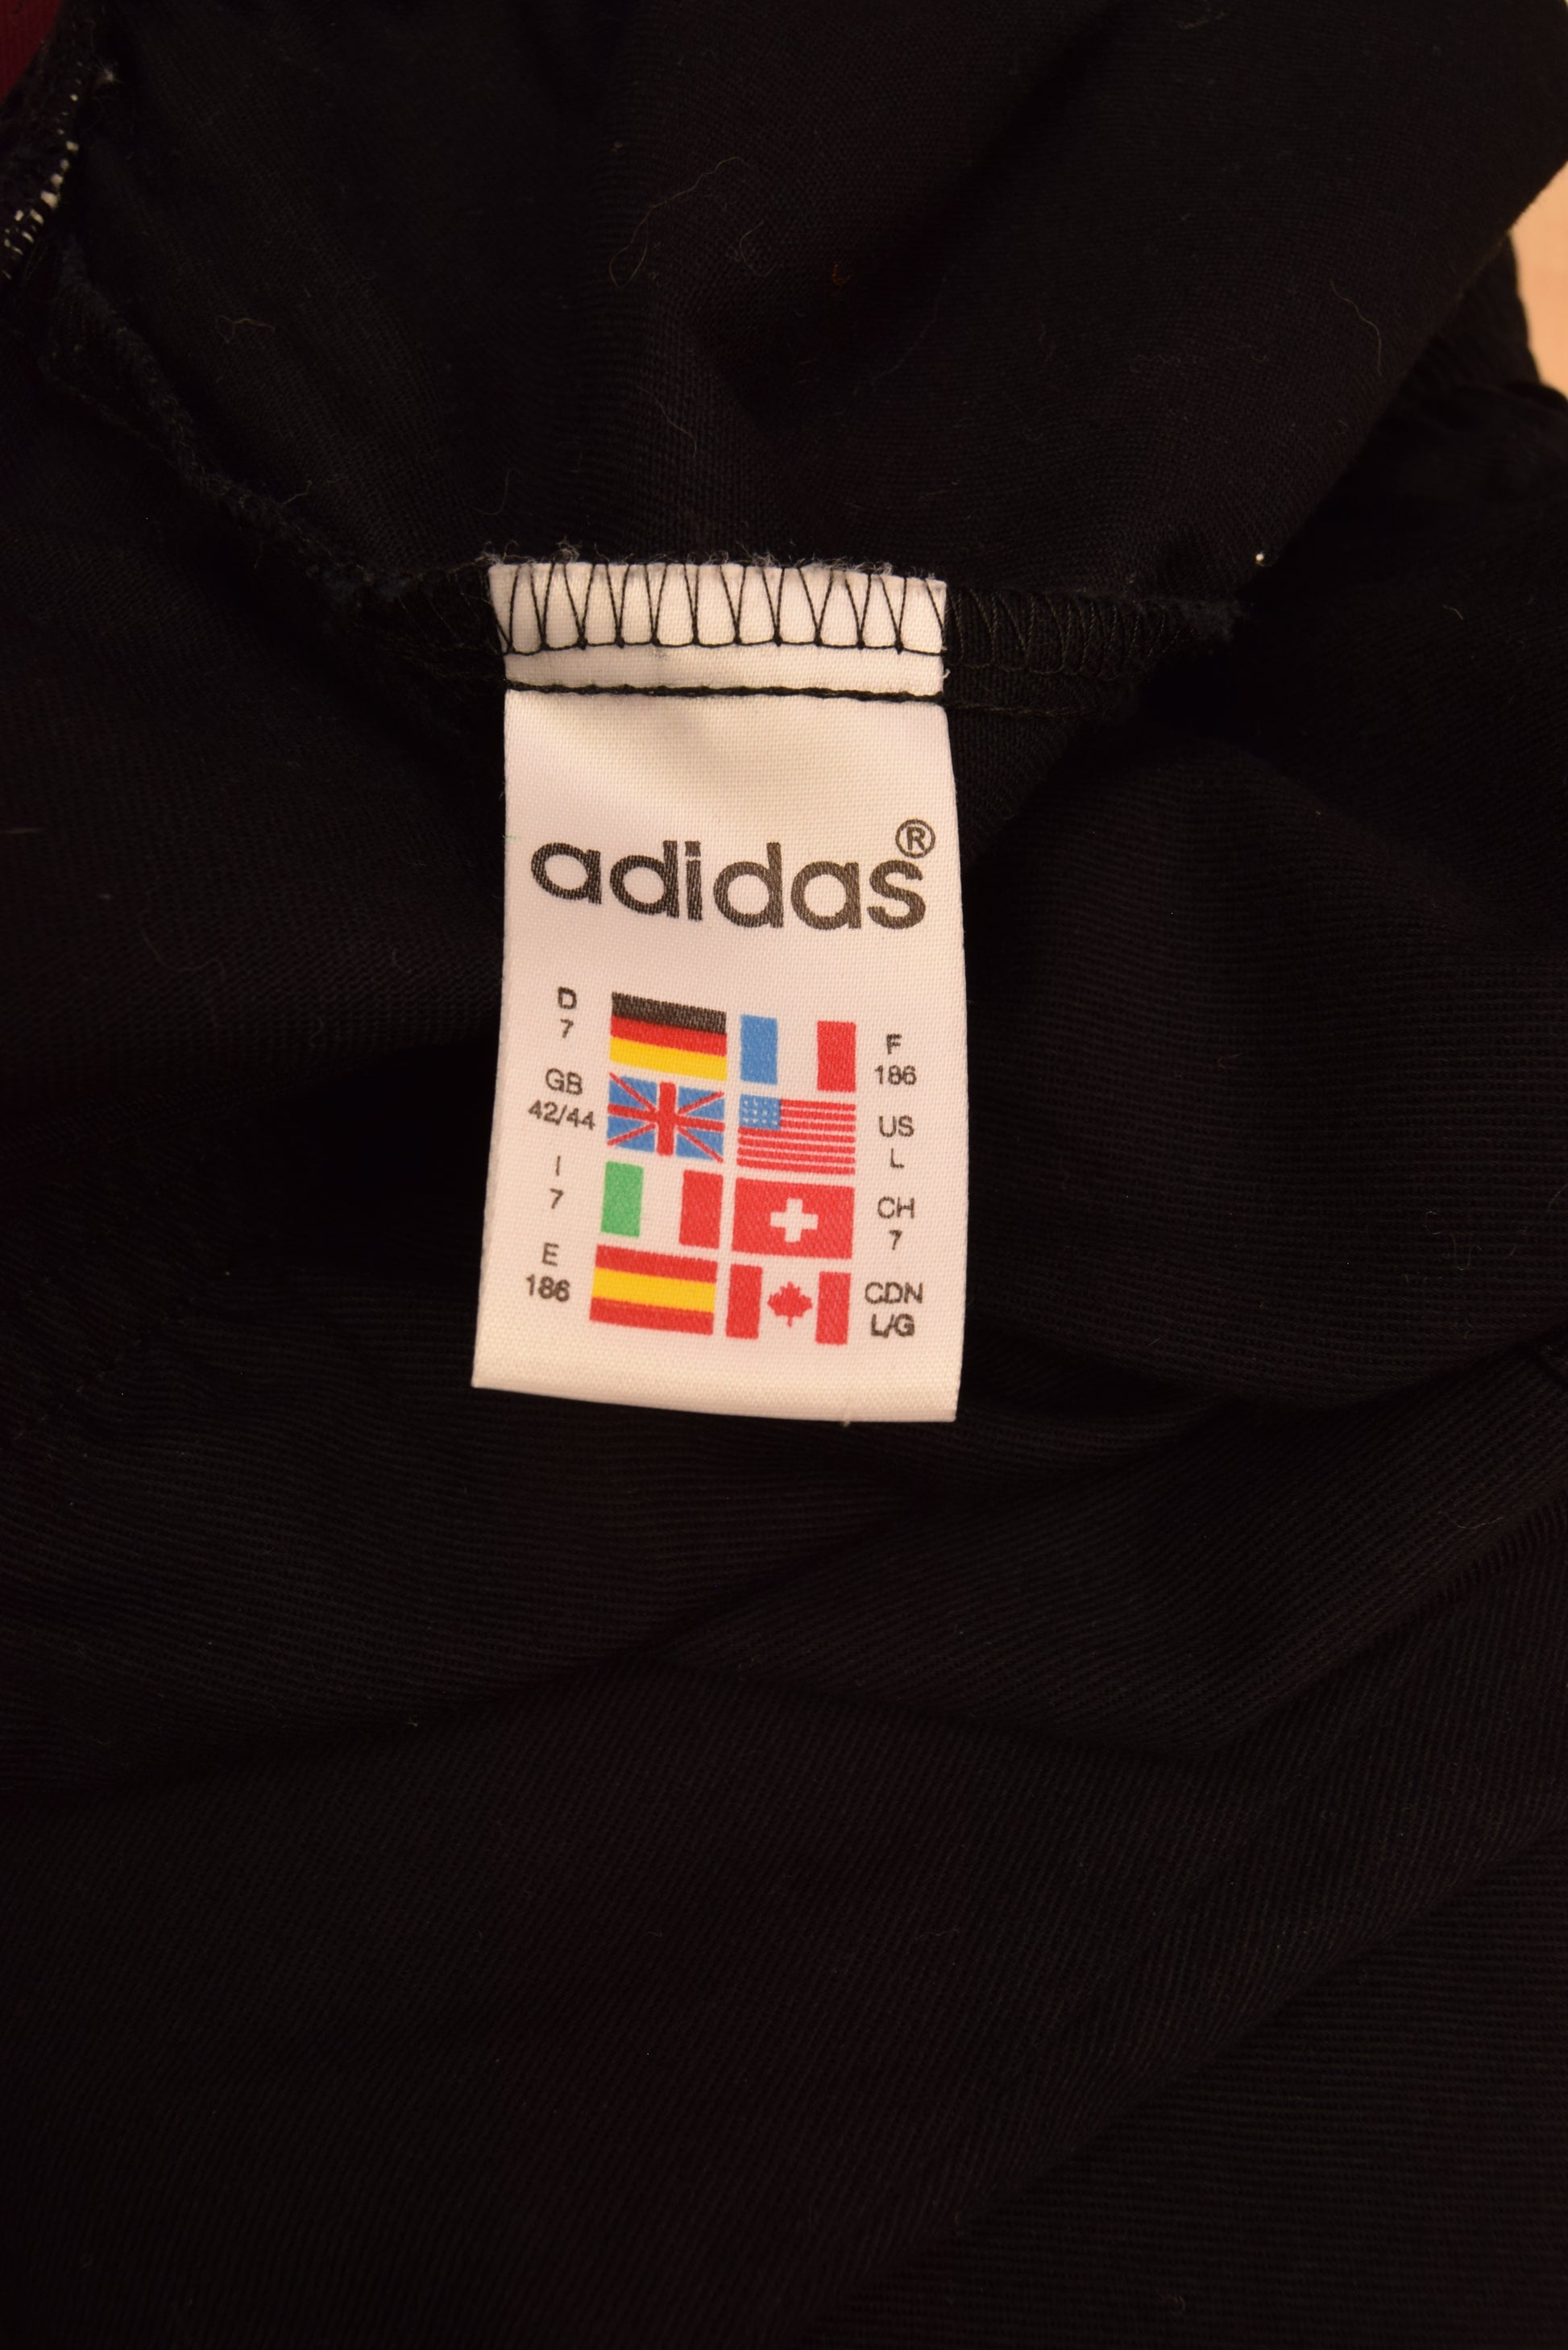 Vintage 1996 Adidas Drill Top / Sweatshirt Black White Burgundy Heavy Cotton Size L-XL